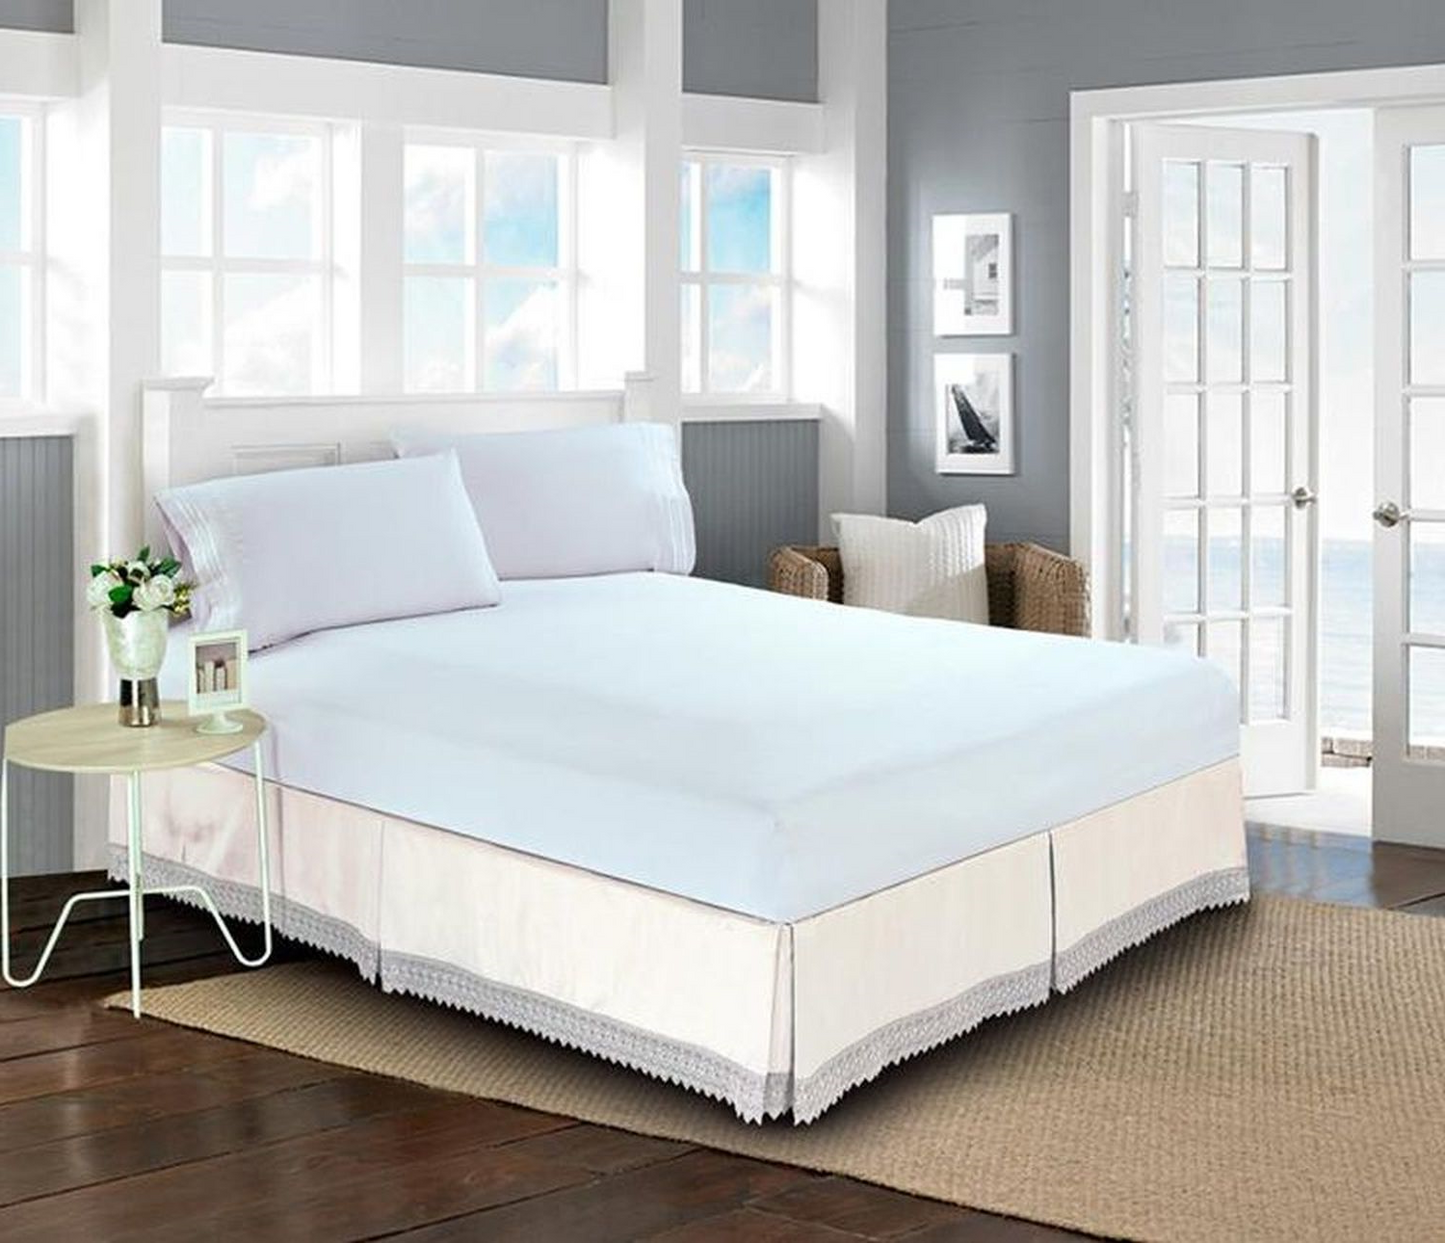 Elegant Comfort Lace Fringe Bed Skirt - 15 inch Drop - Elevate your Bed